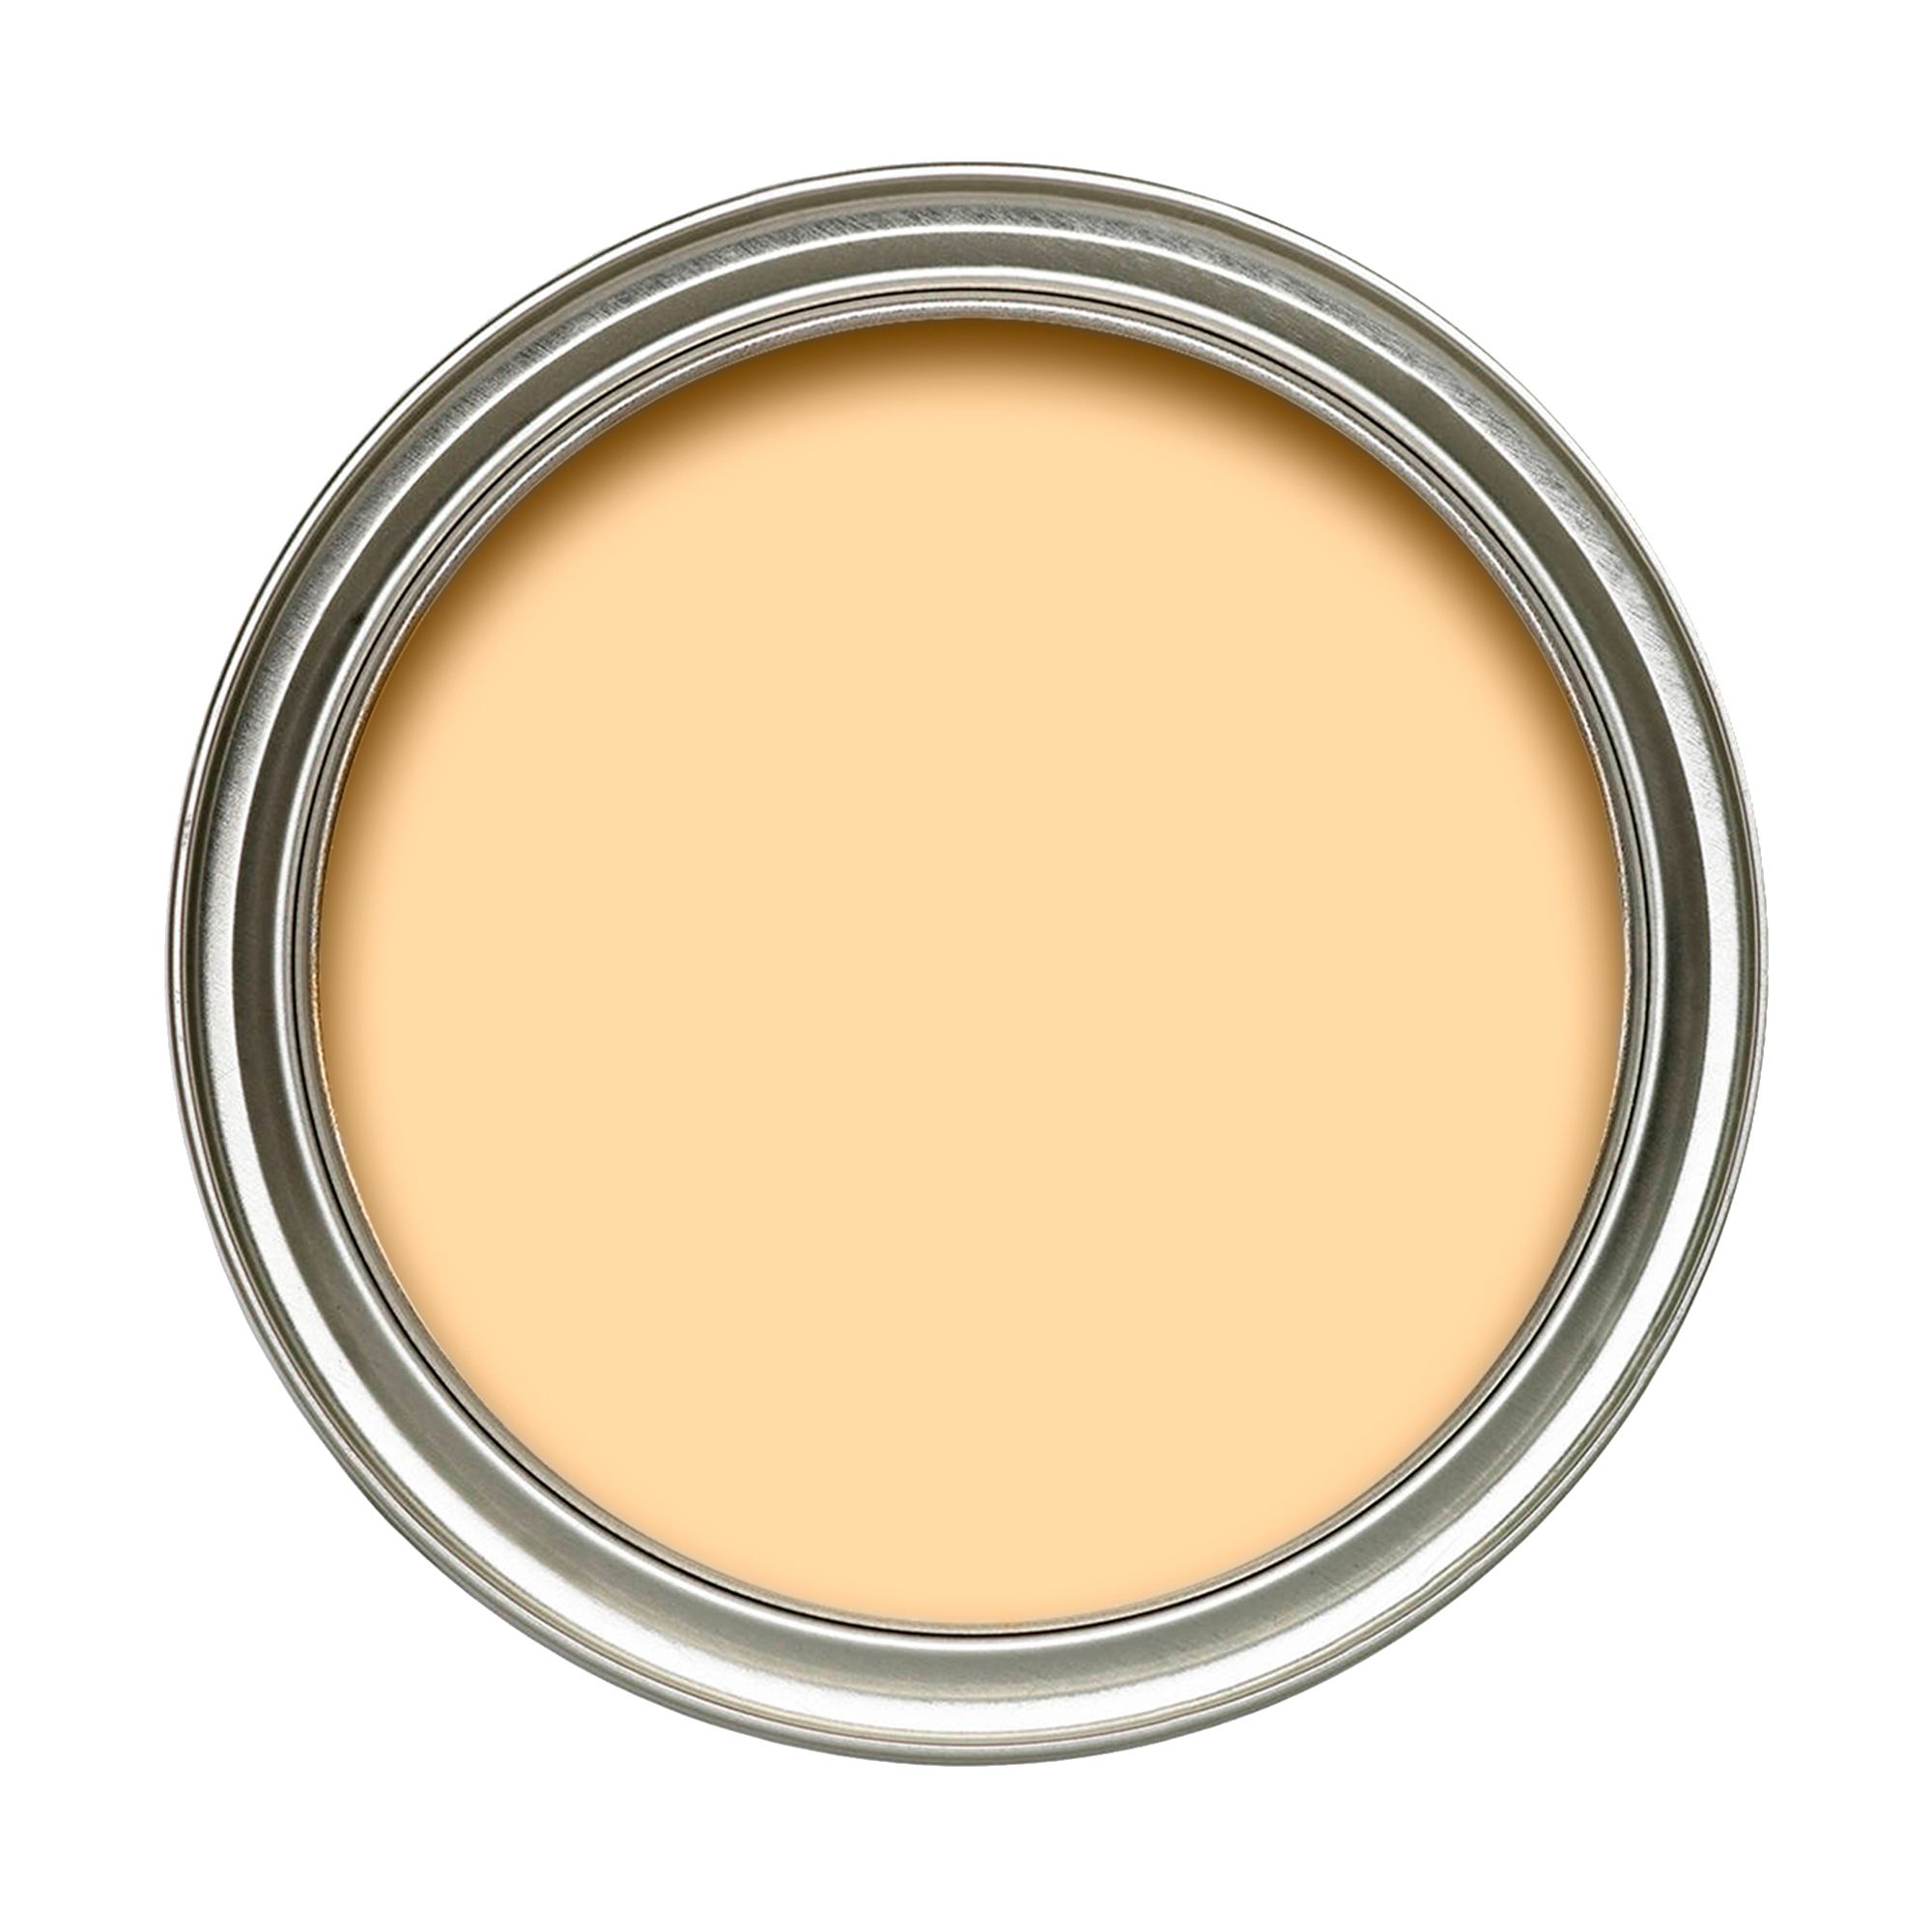 Dulux Morning glow Soft sheen Emulsion paint, 2.5L